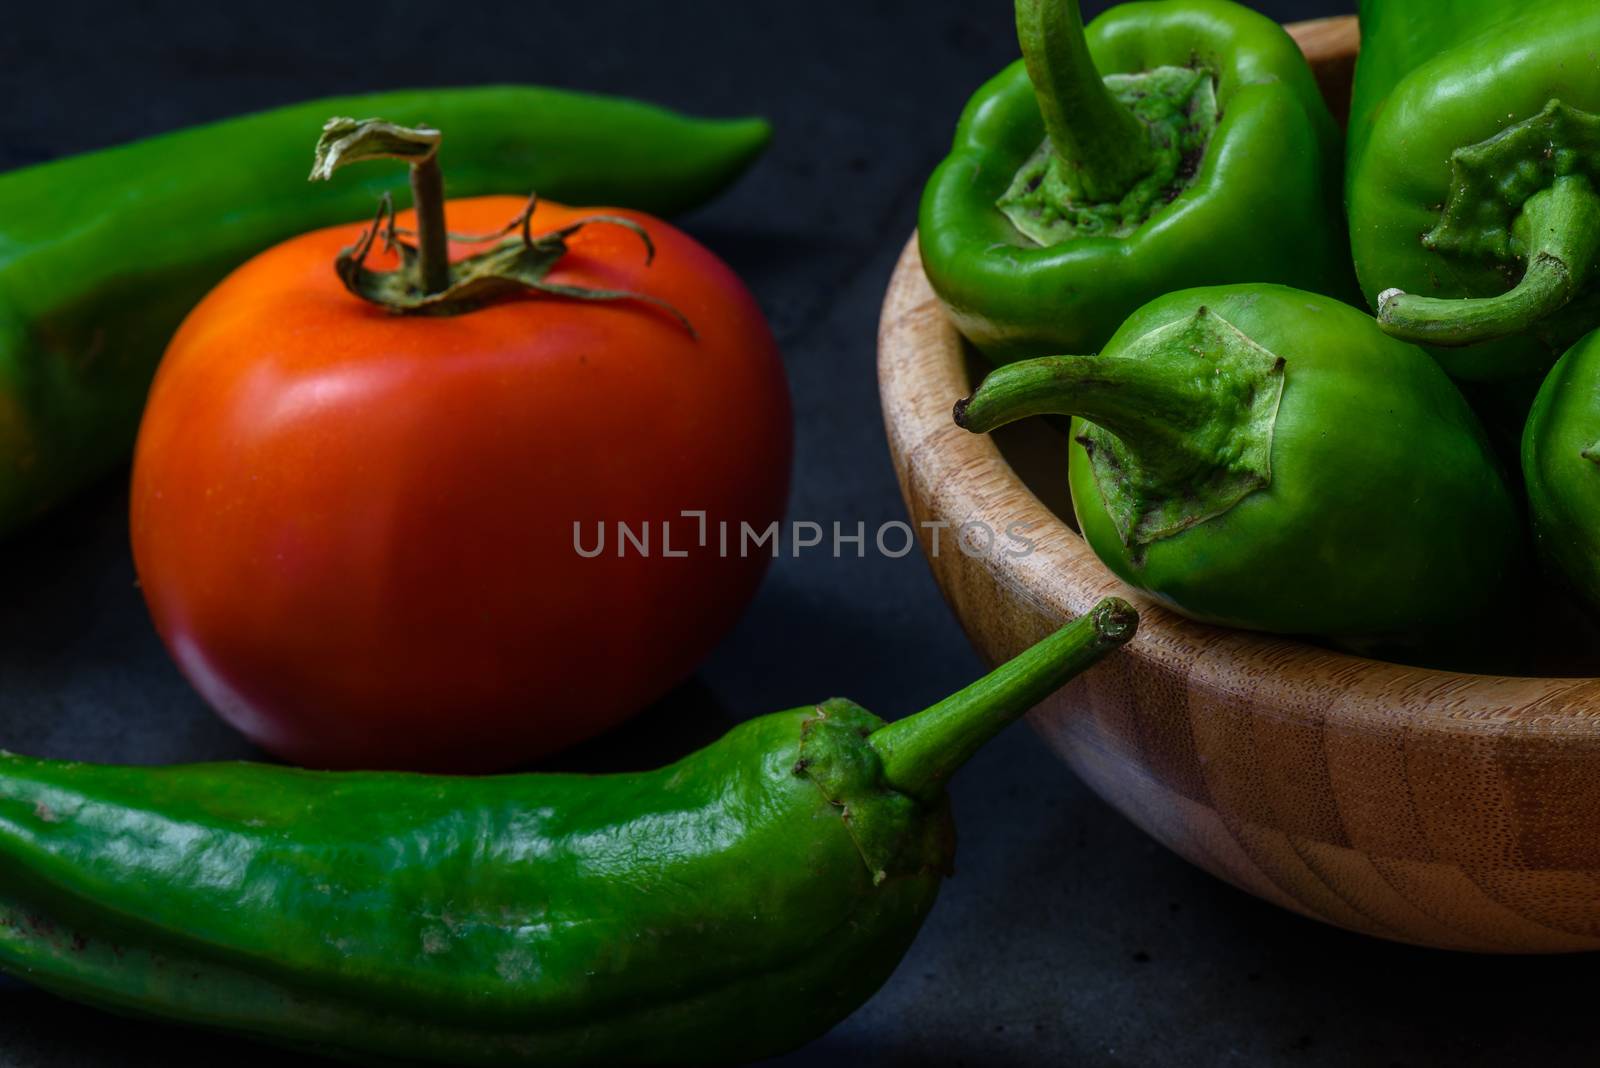 tomato and chili pepper on a dark background by Seva_blsv